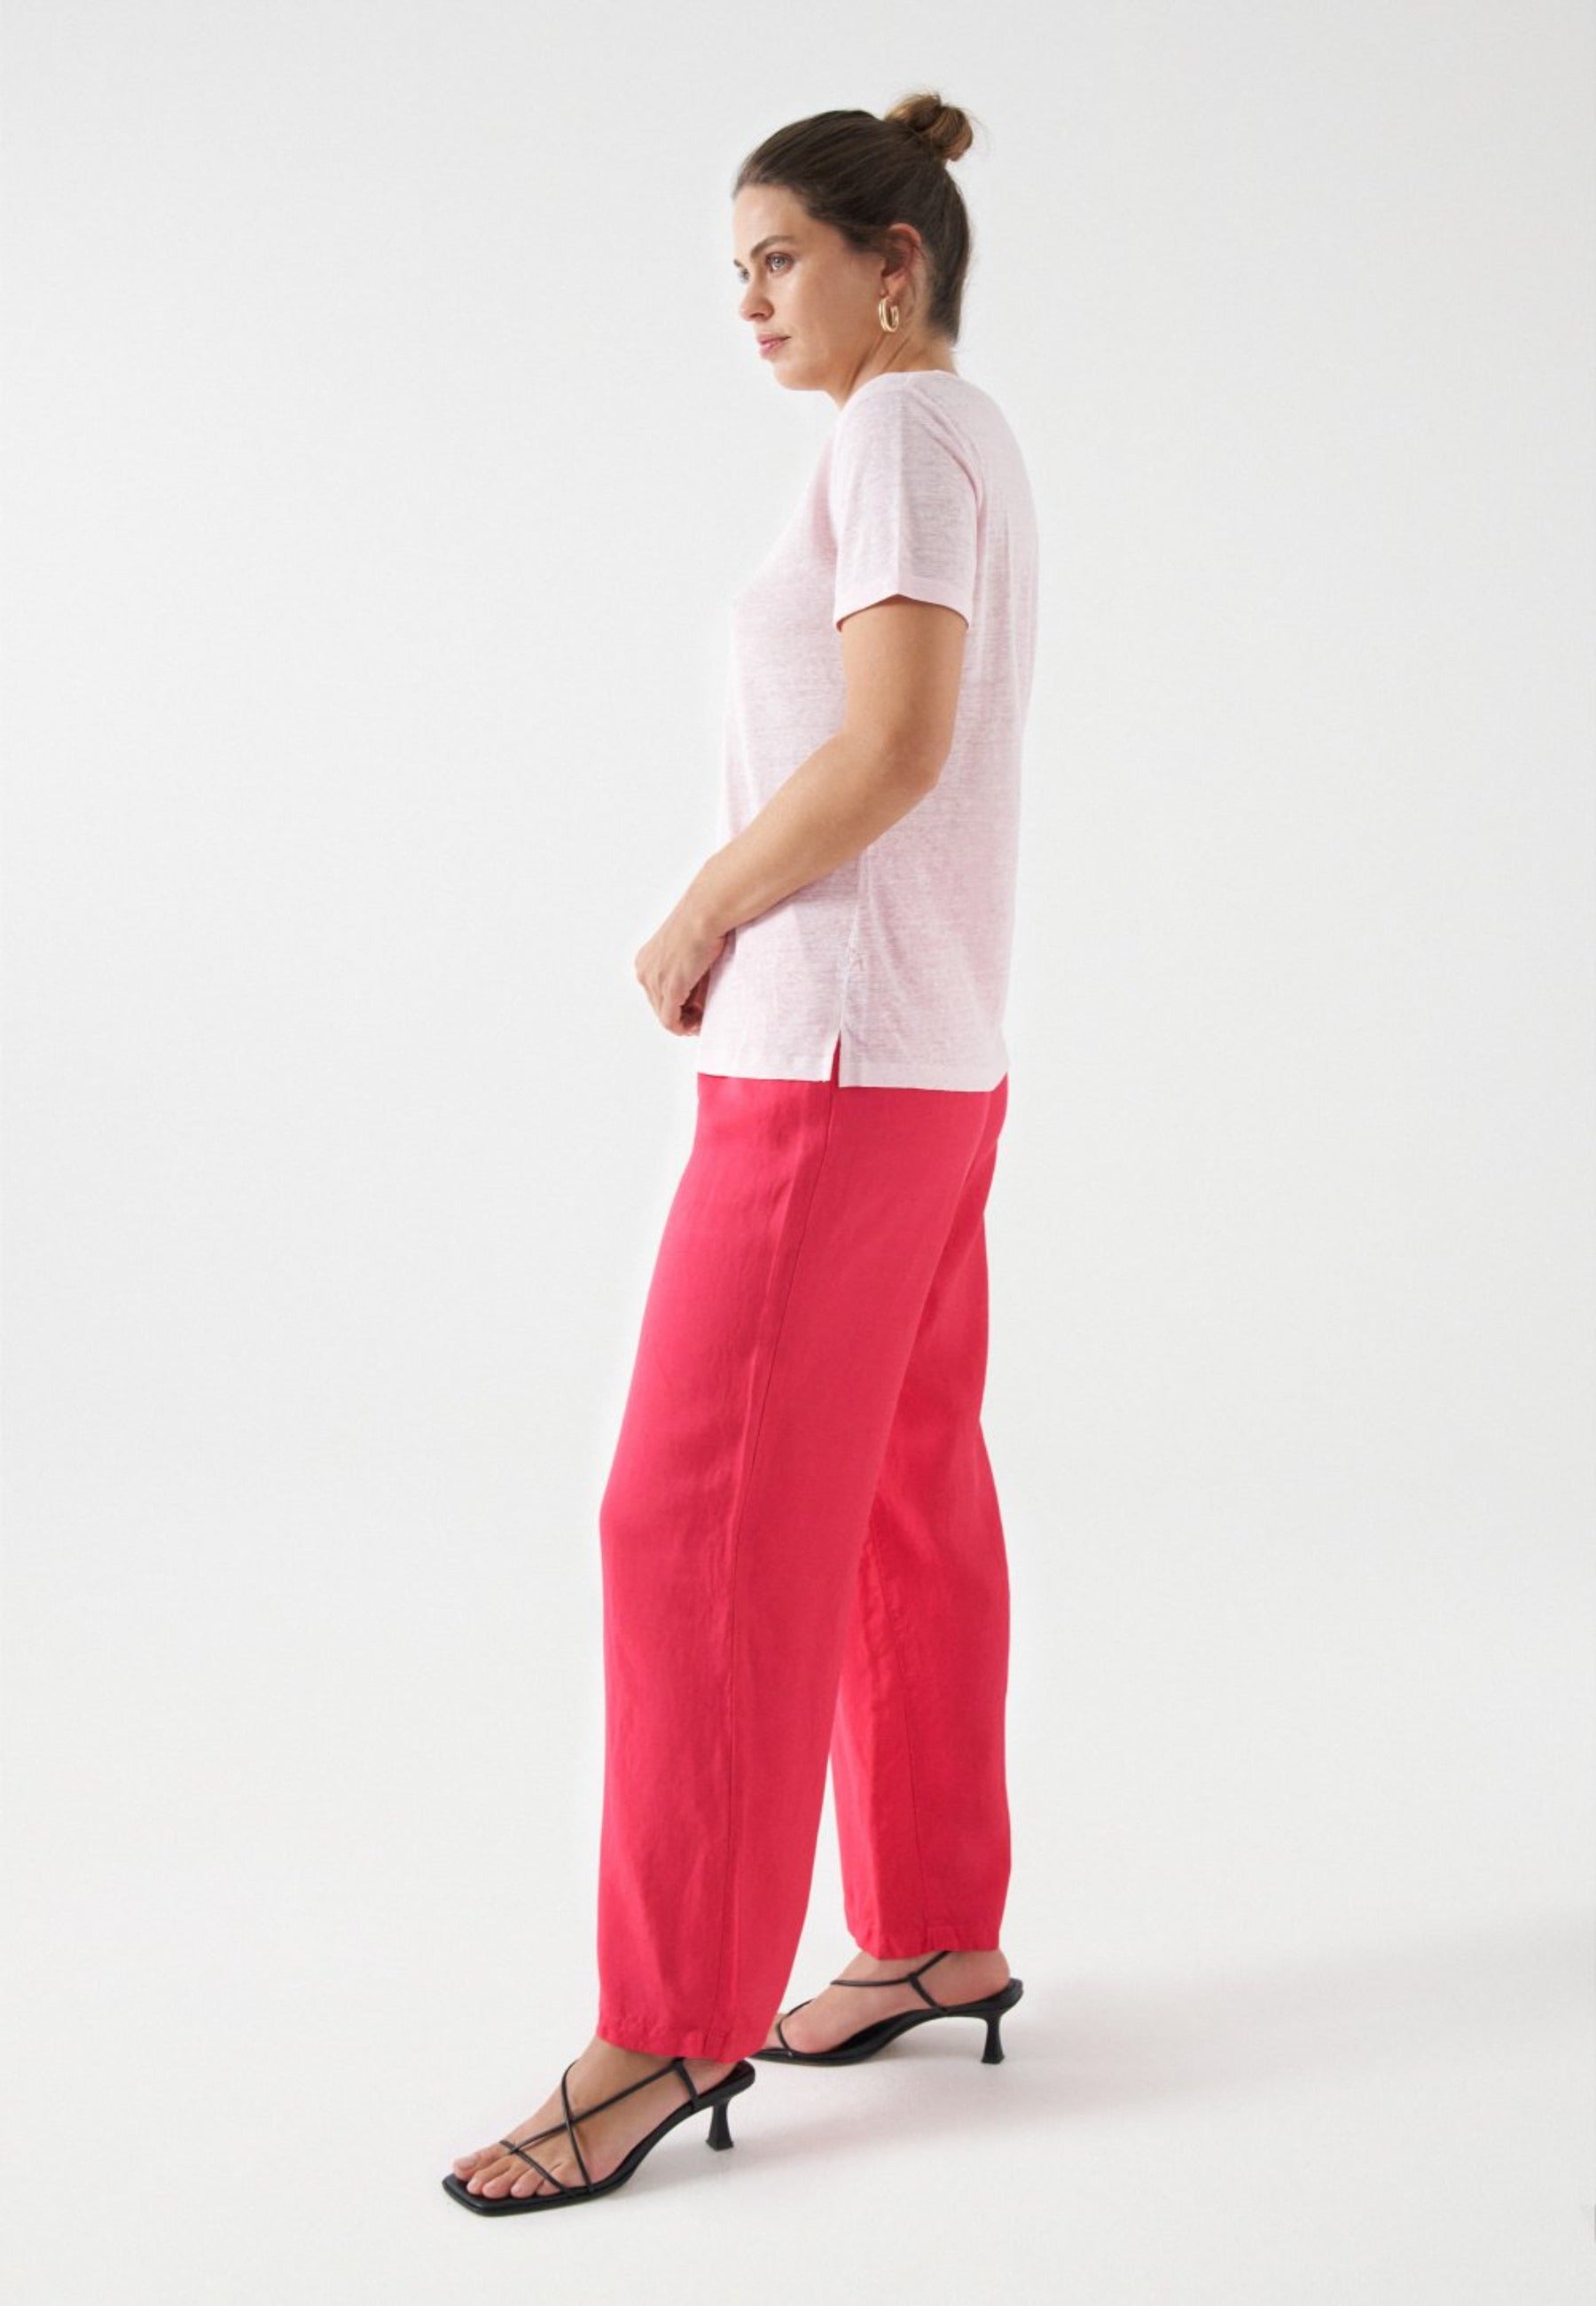 Linen V-Neck T-Shirt in Light Pink T-Shirts Salsa Jeans   